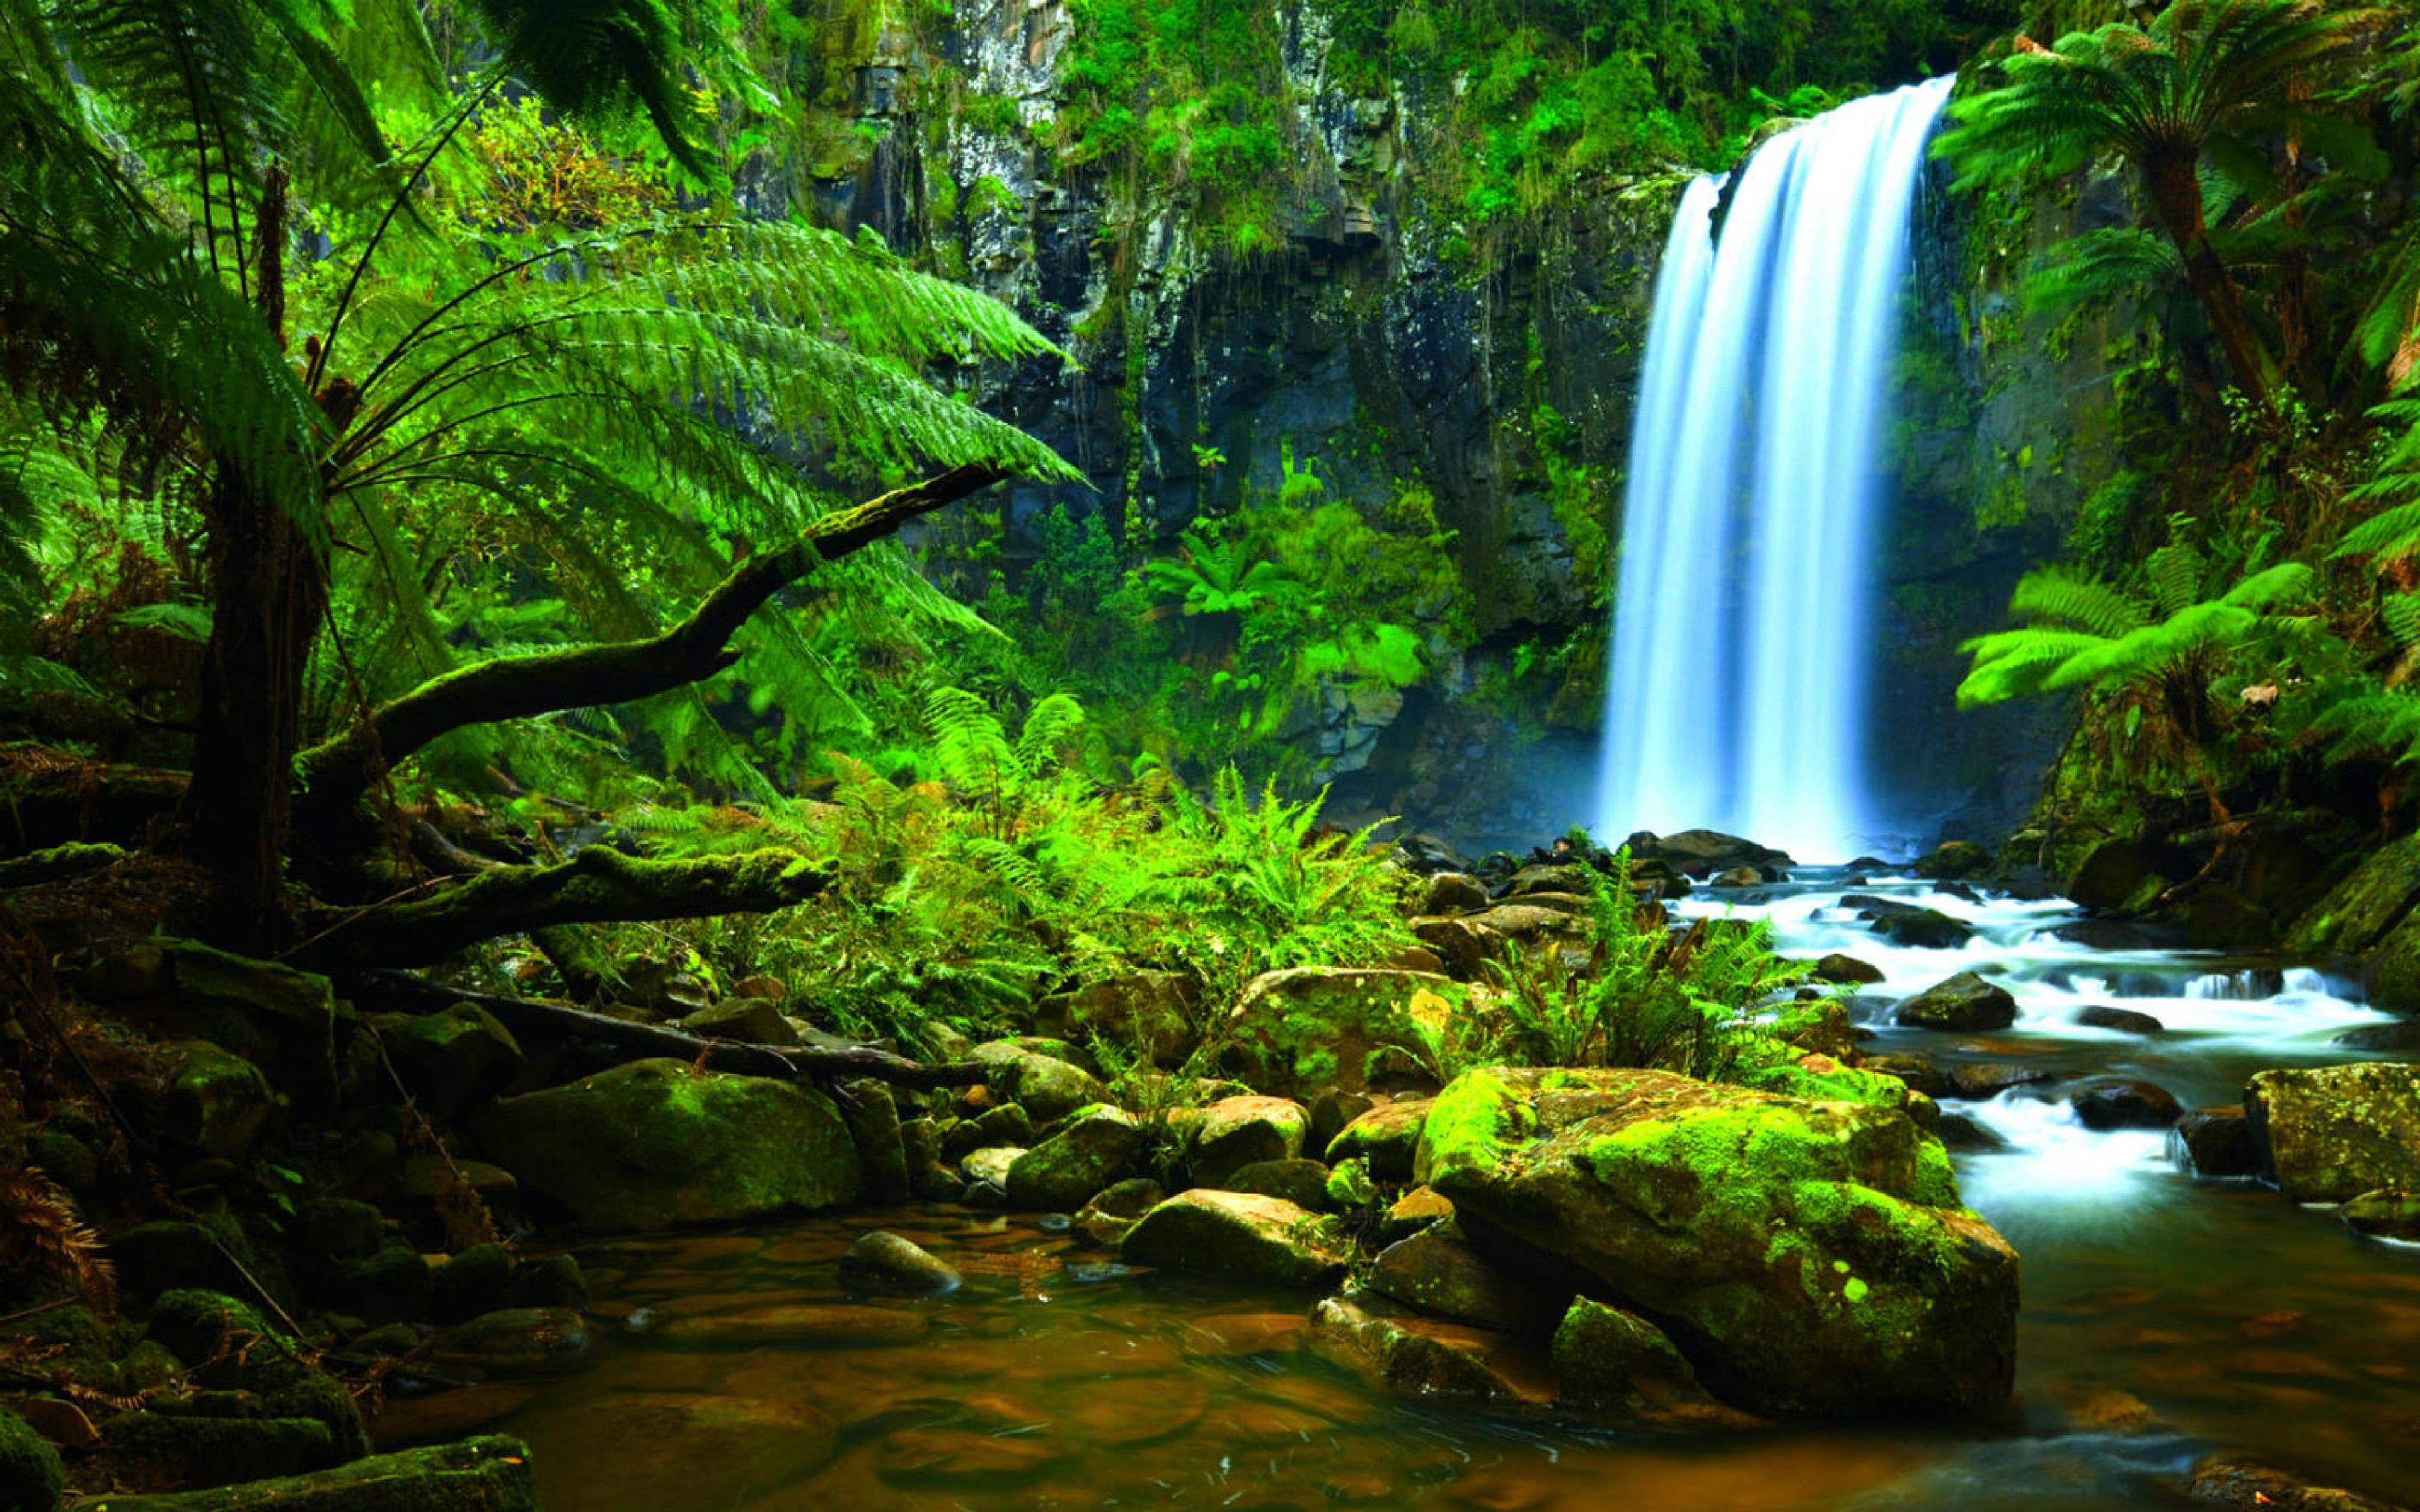 Waterfall-Jungle-green tropical vegetation-rocks-trees-fern-moss-3840×2400